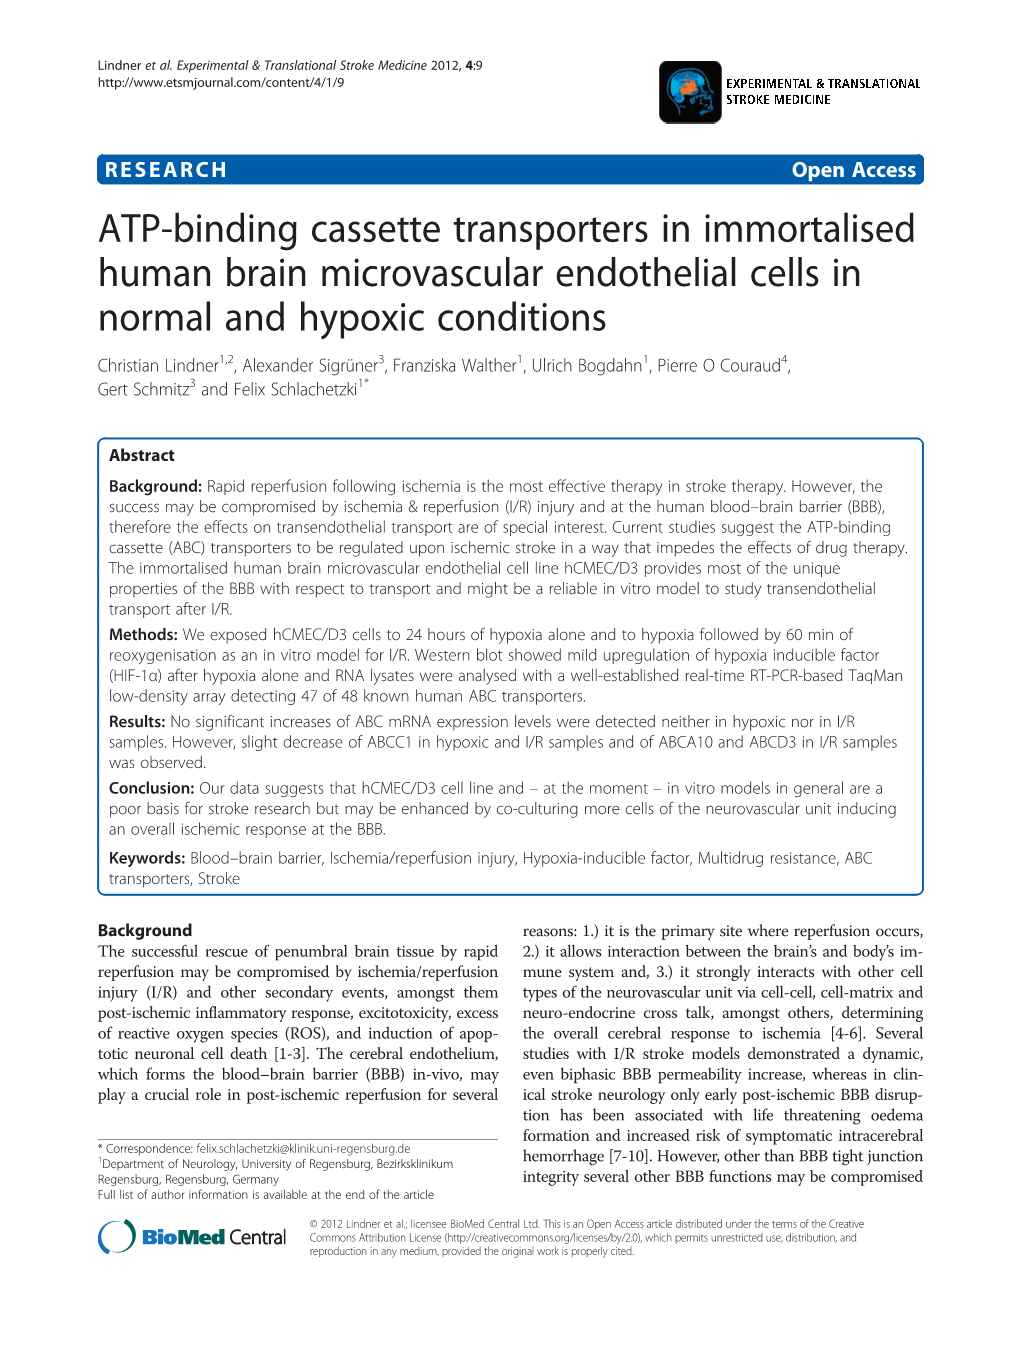 ATP-Binding Cassette Transporters in Immortalised Human Brain